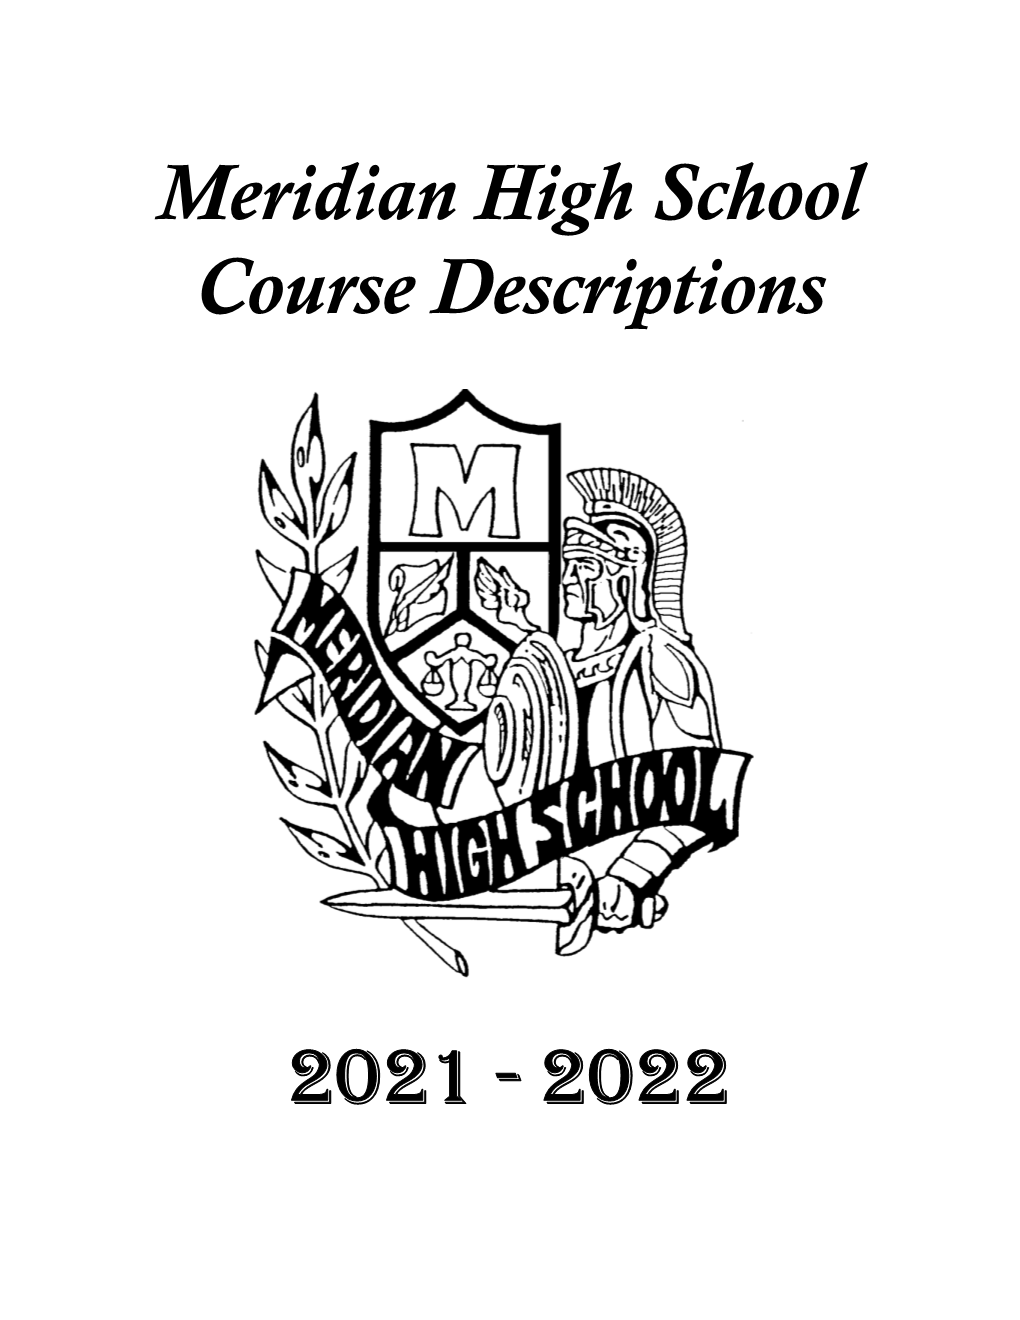 Meridian High School Course Descriptions 2021